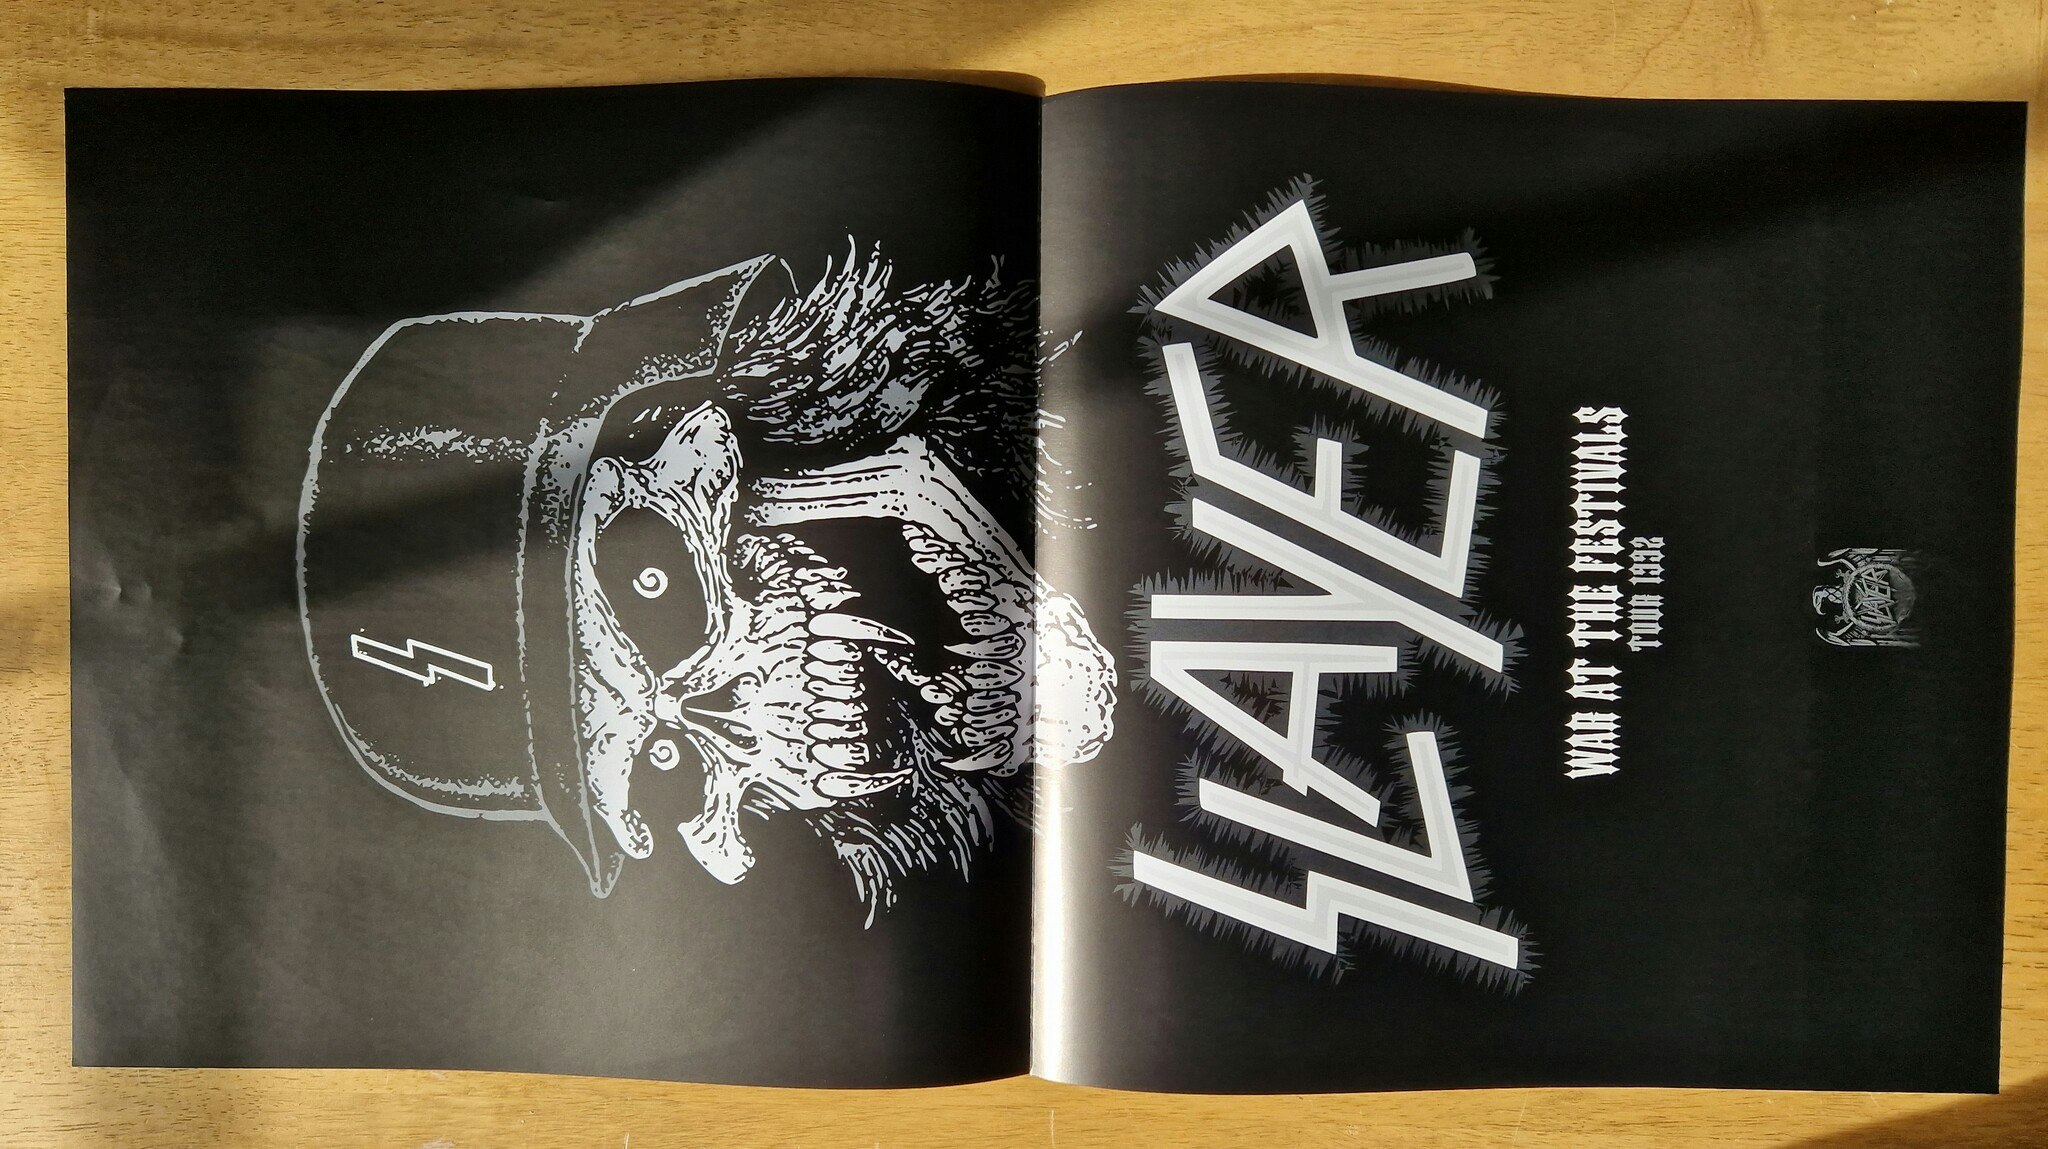 Slayer, War at the festivals tour. Vinyl LP